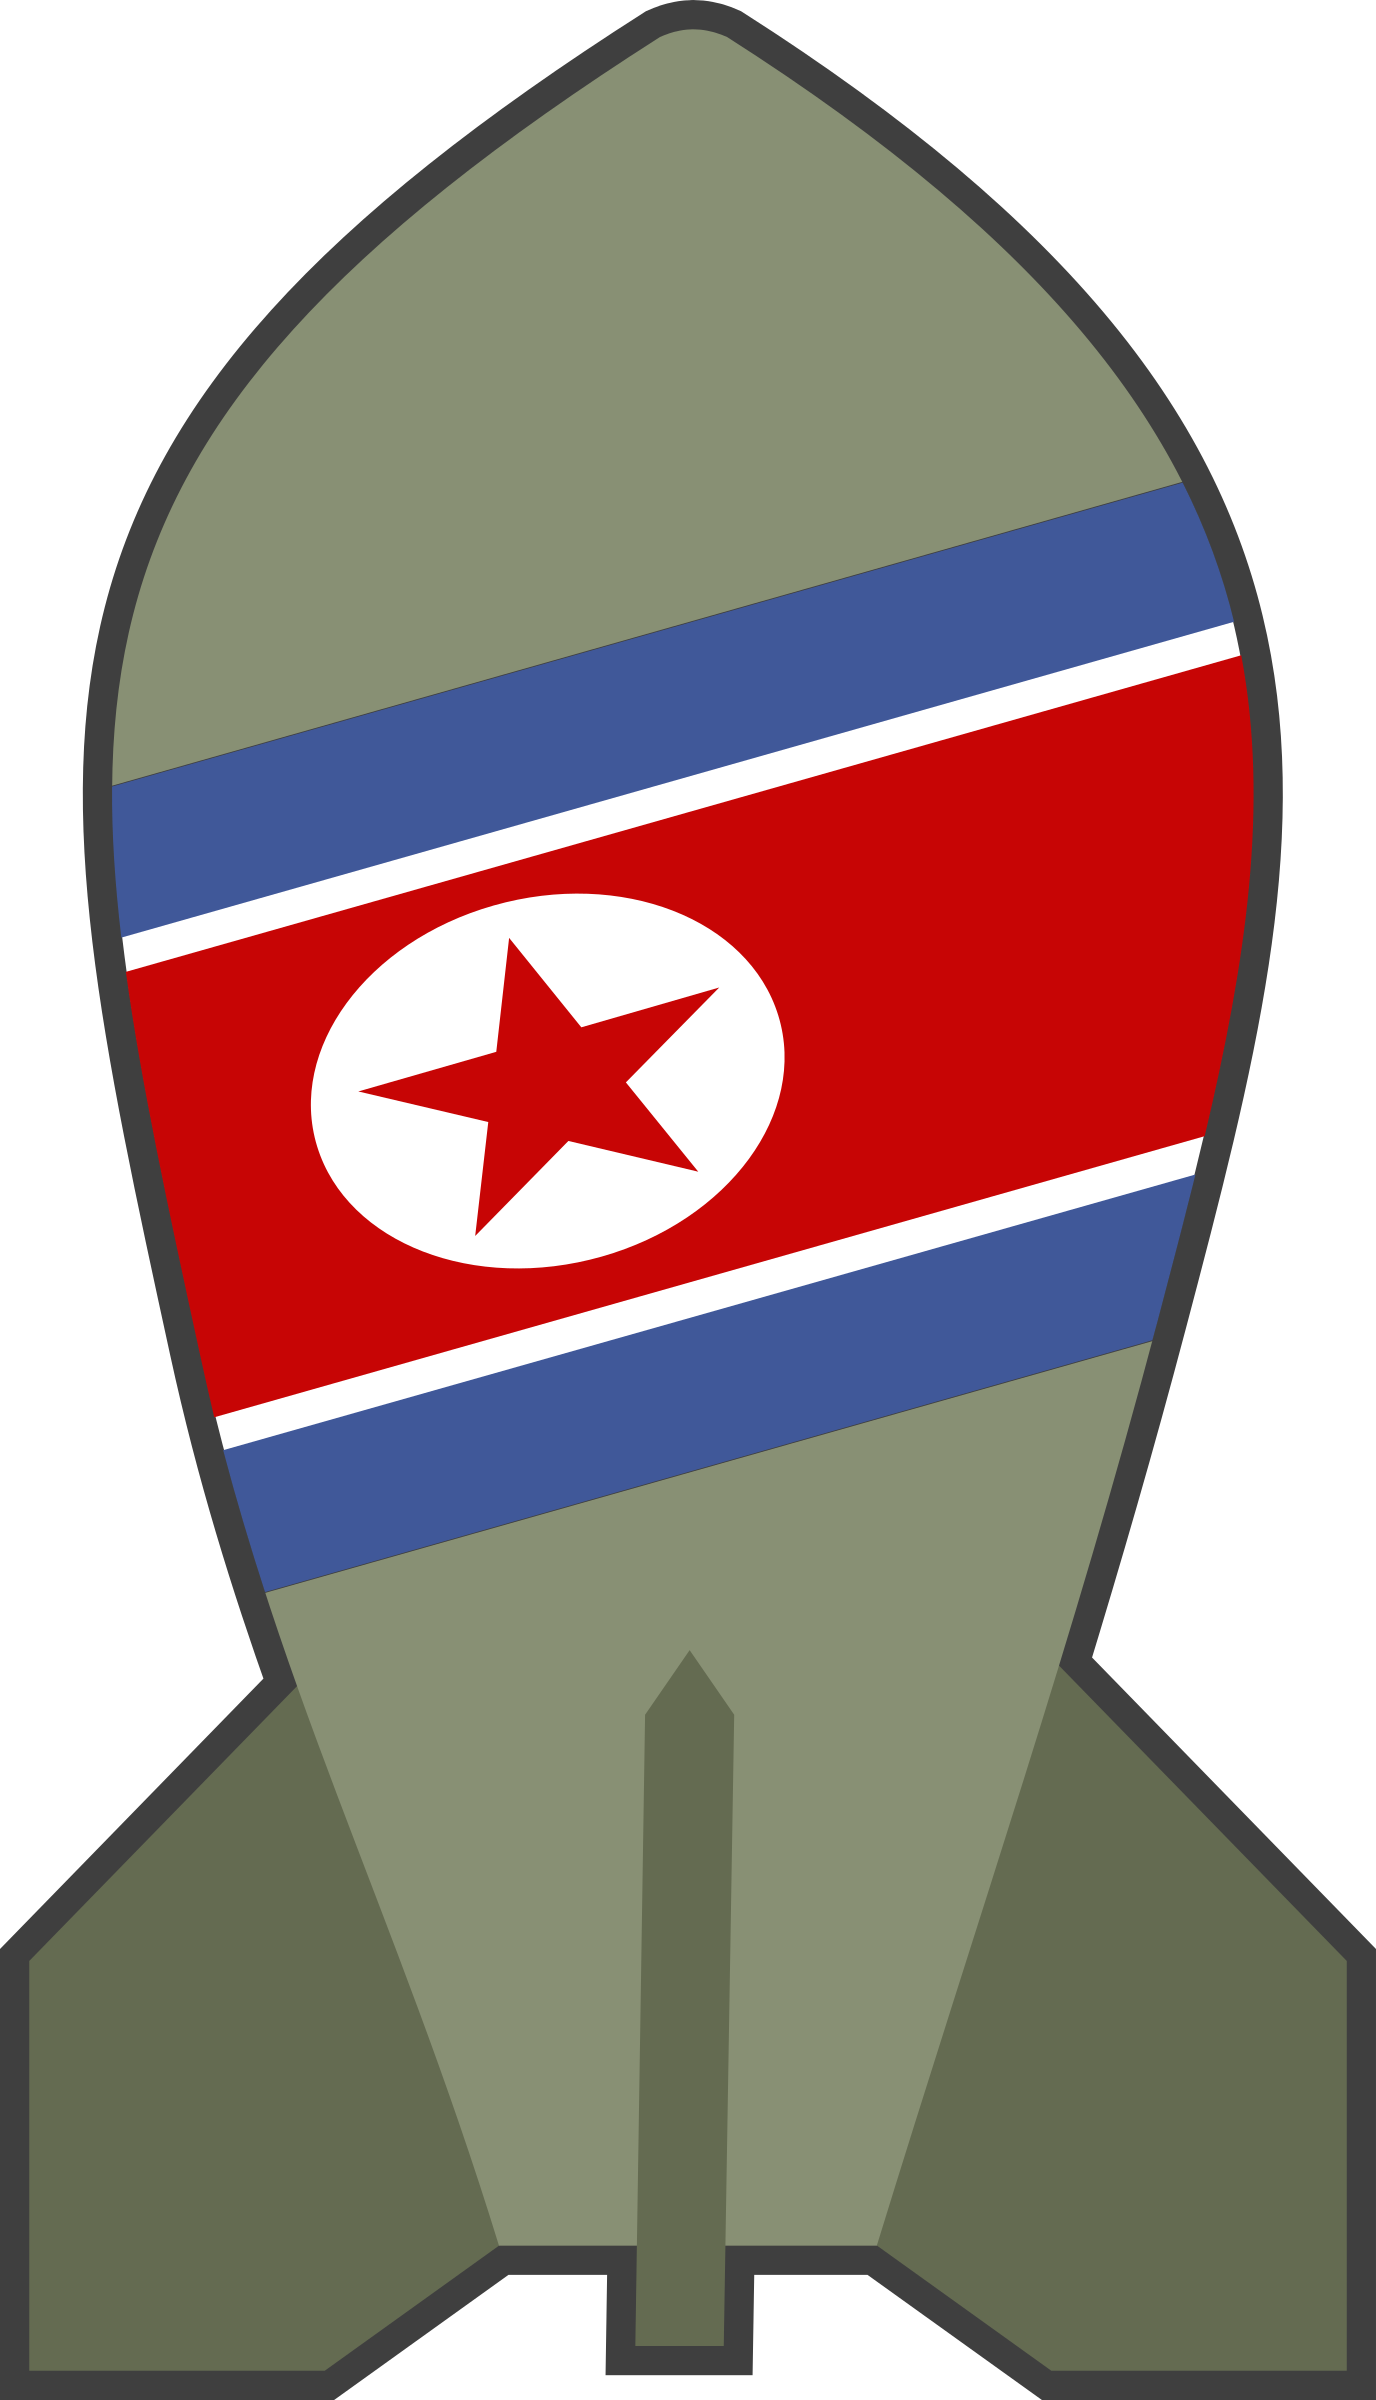 Clipart - Simple Cartoon North Korea Bomb